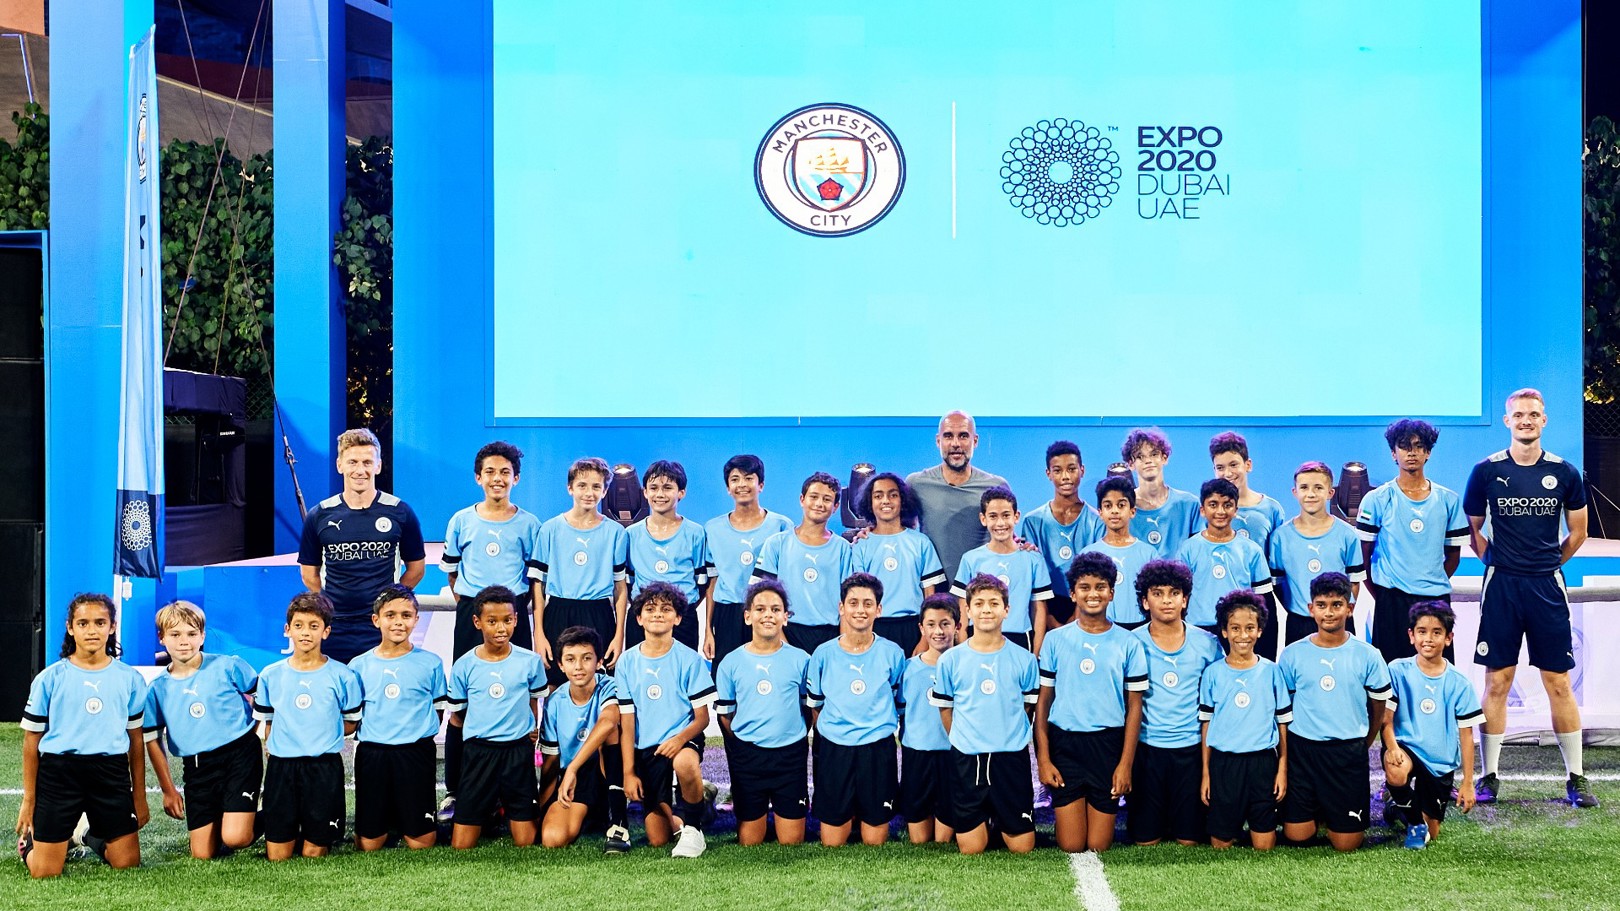 Visita sorpresa de Pep Guardiola a la Expo Dubai 2020